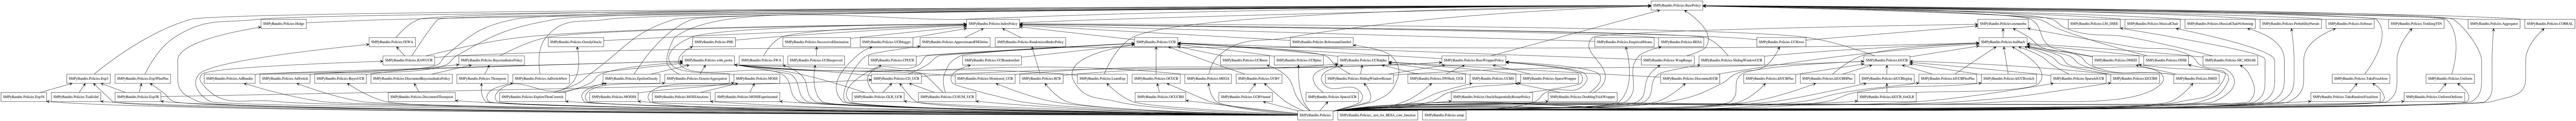 UML Diagram - Package SMPyBandits.Policies.png